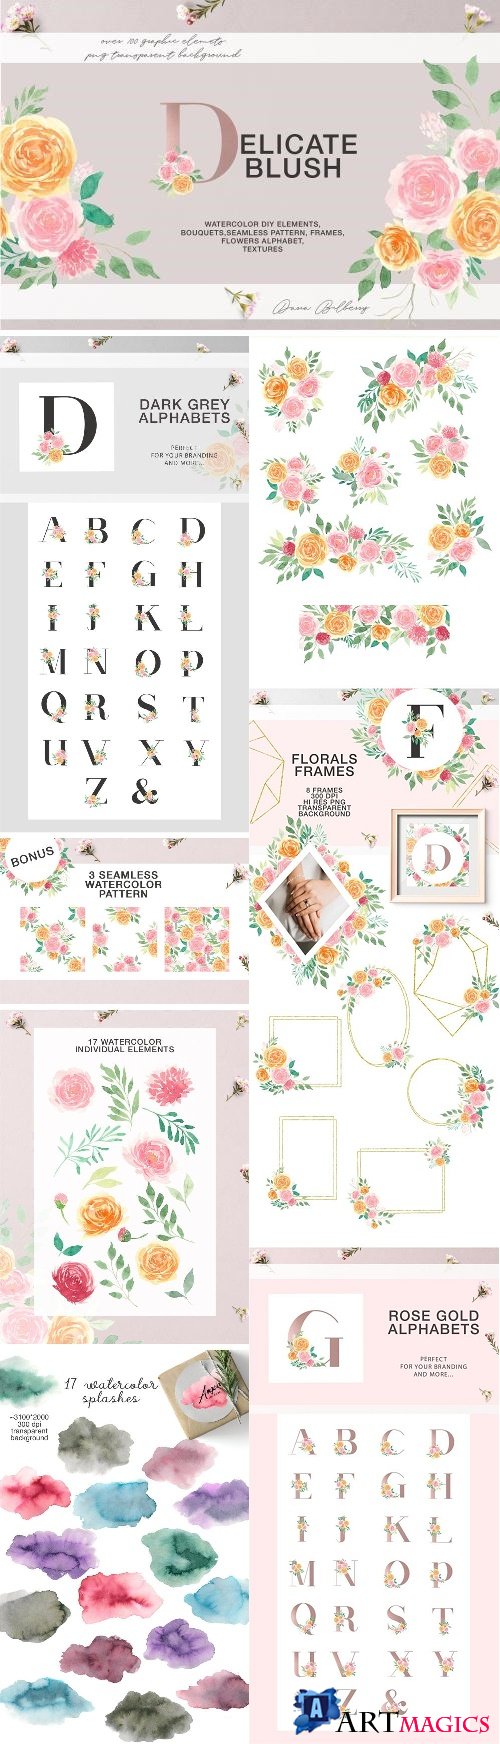 Delicate Blush - Spring Graphic set - 2453036